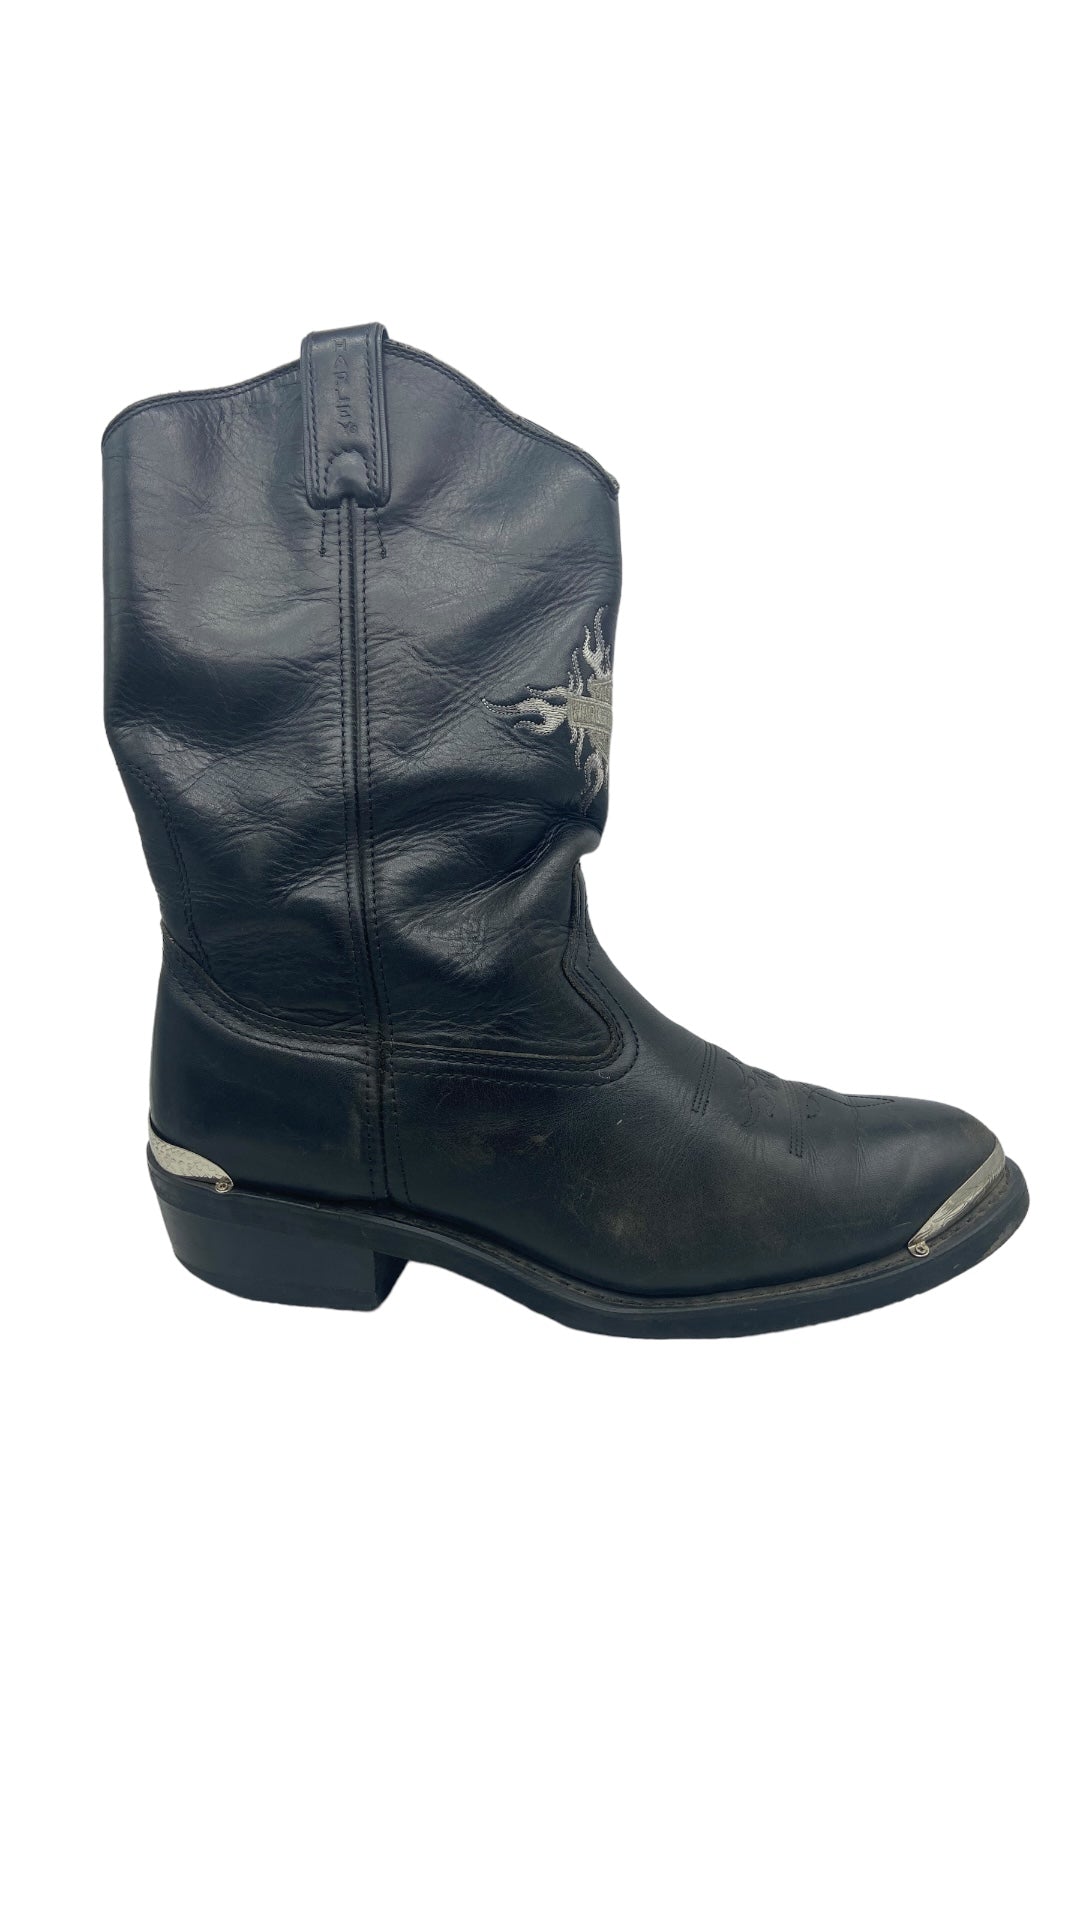 Harley Davidson Silver/Black Cowboy Boots Sz 12